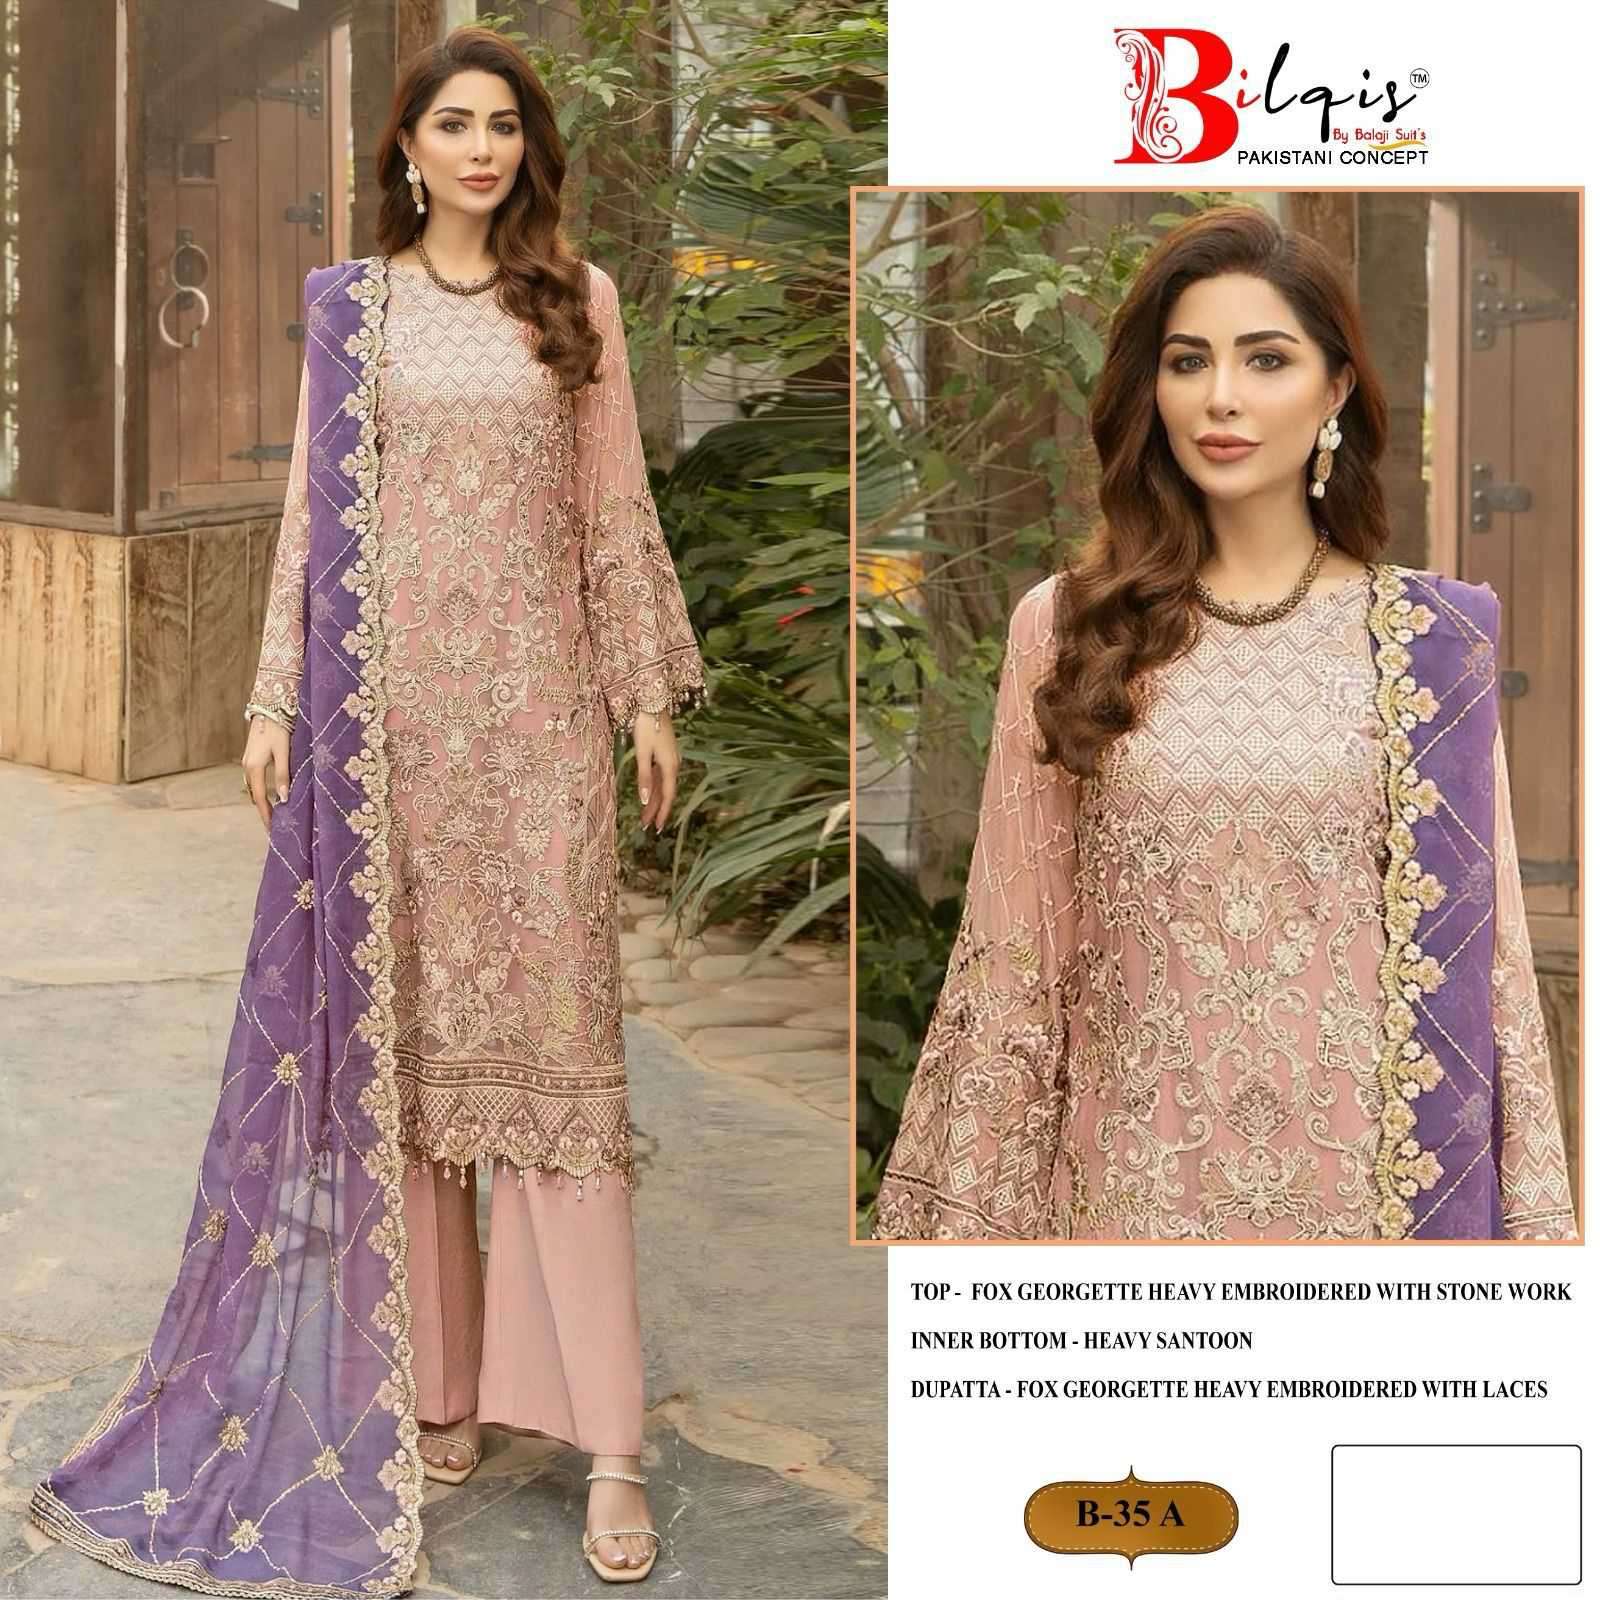 Bilqis B 35 Colors Designer Pakistani Dress Online Sales Exporters